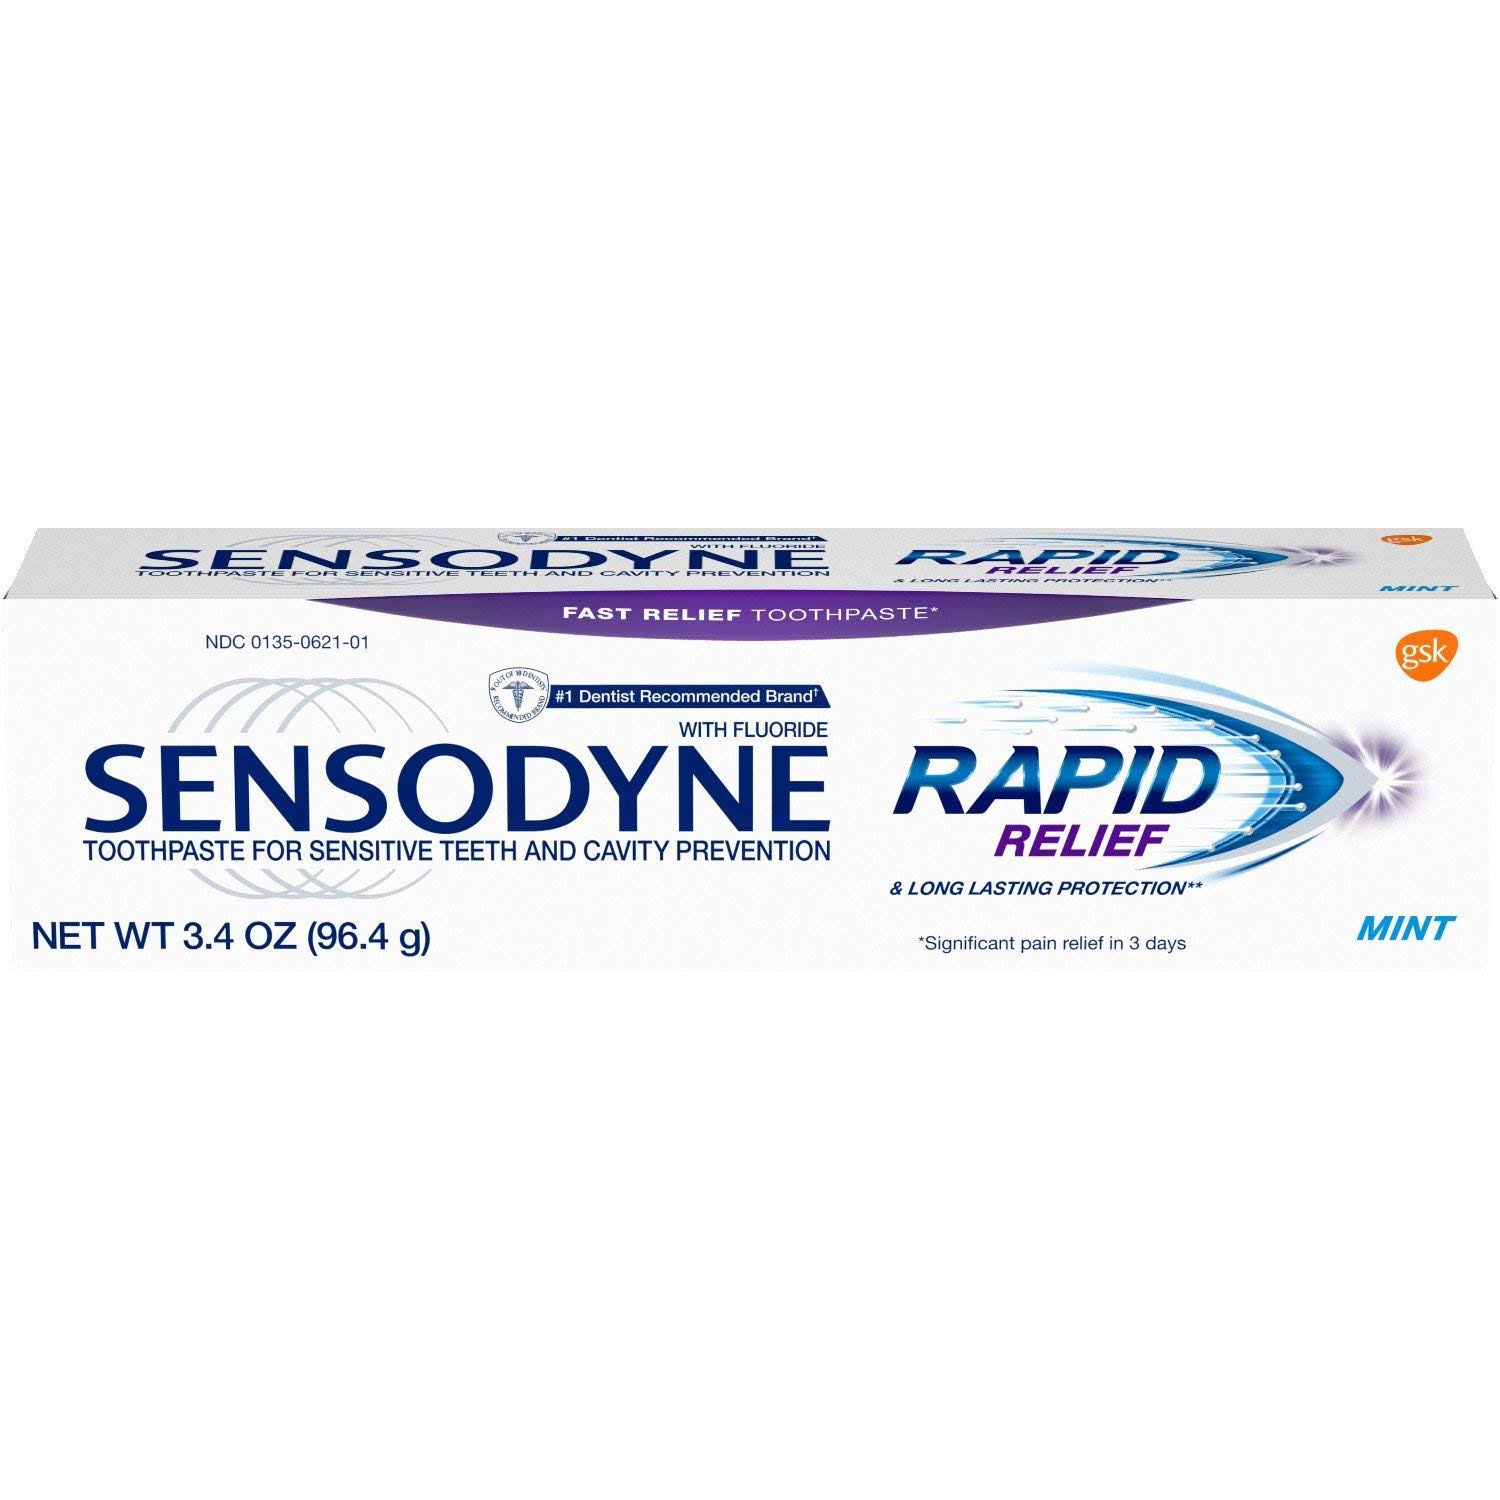 Sensodyne Rapid Relief Toothpaste - Mint, 3.4oz